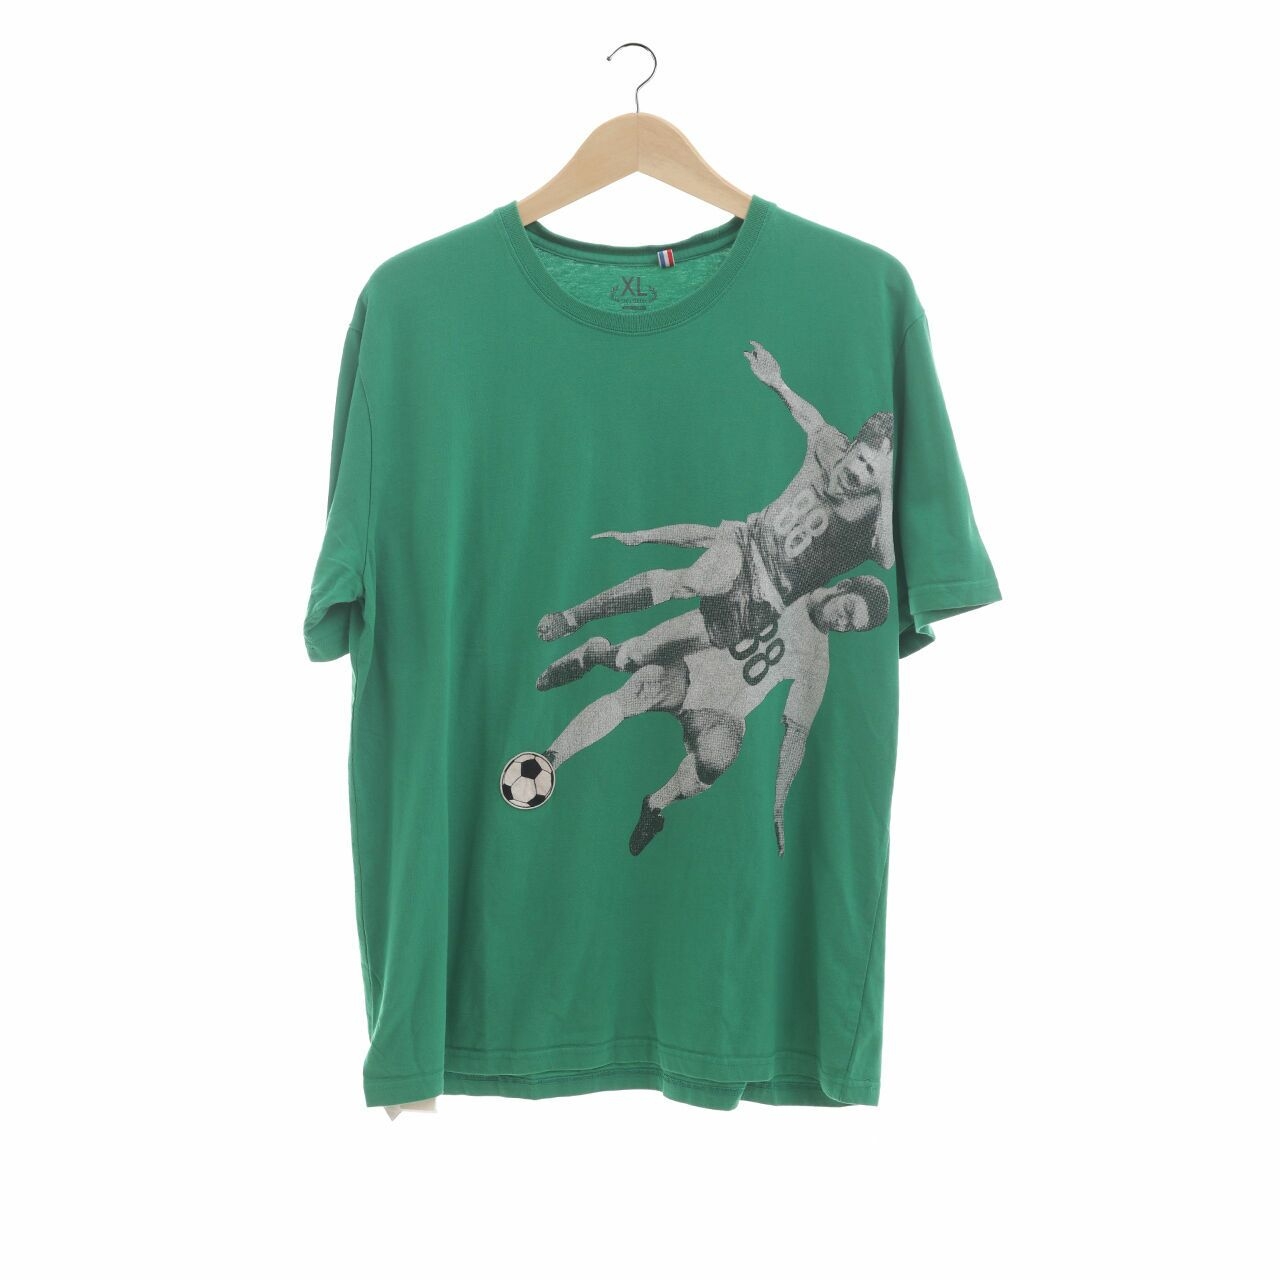 Tee Library Green Printed T-Shirt